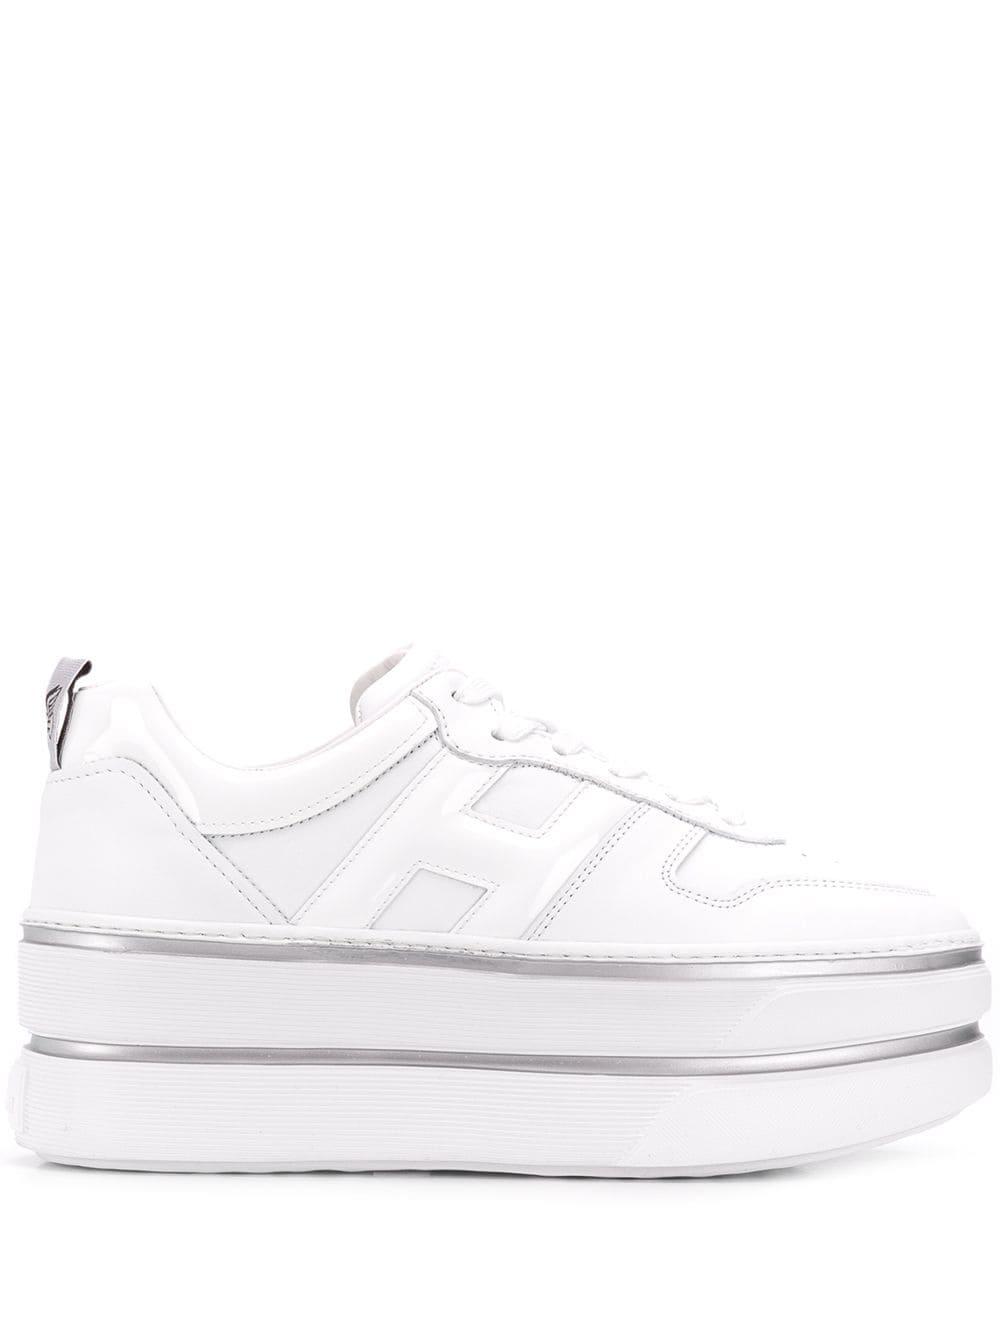 Hogan Leather White Platform Sneakers | Lyst